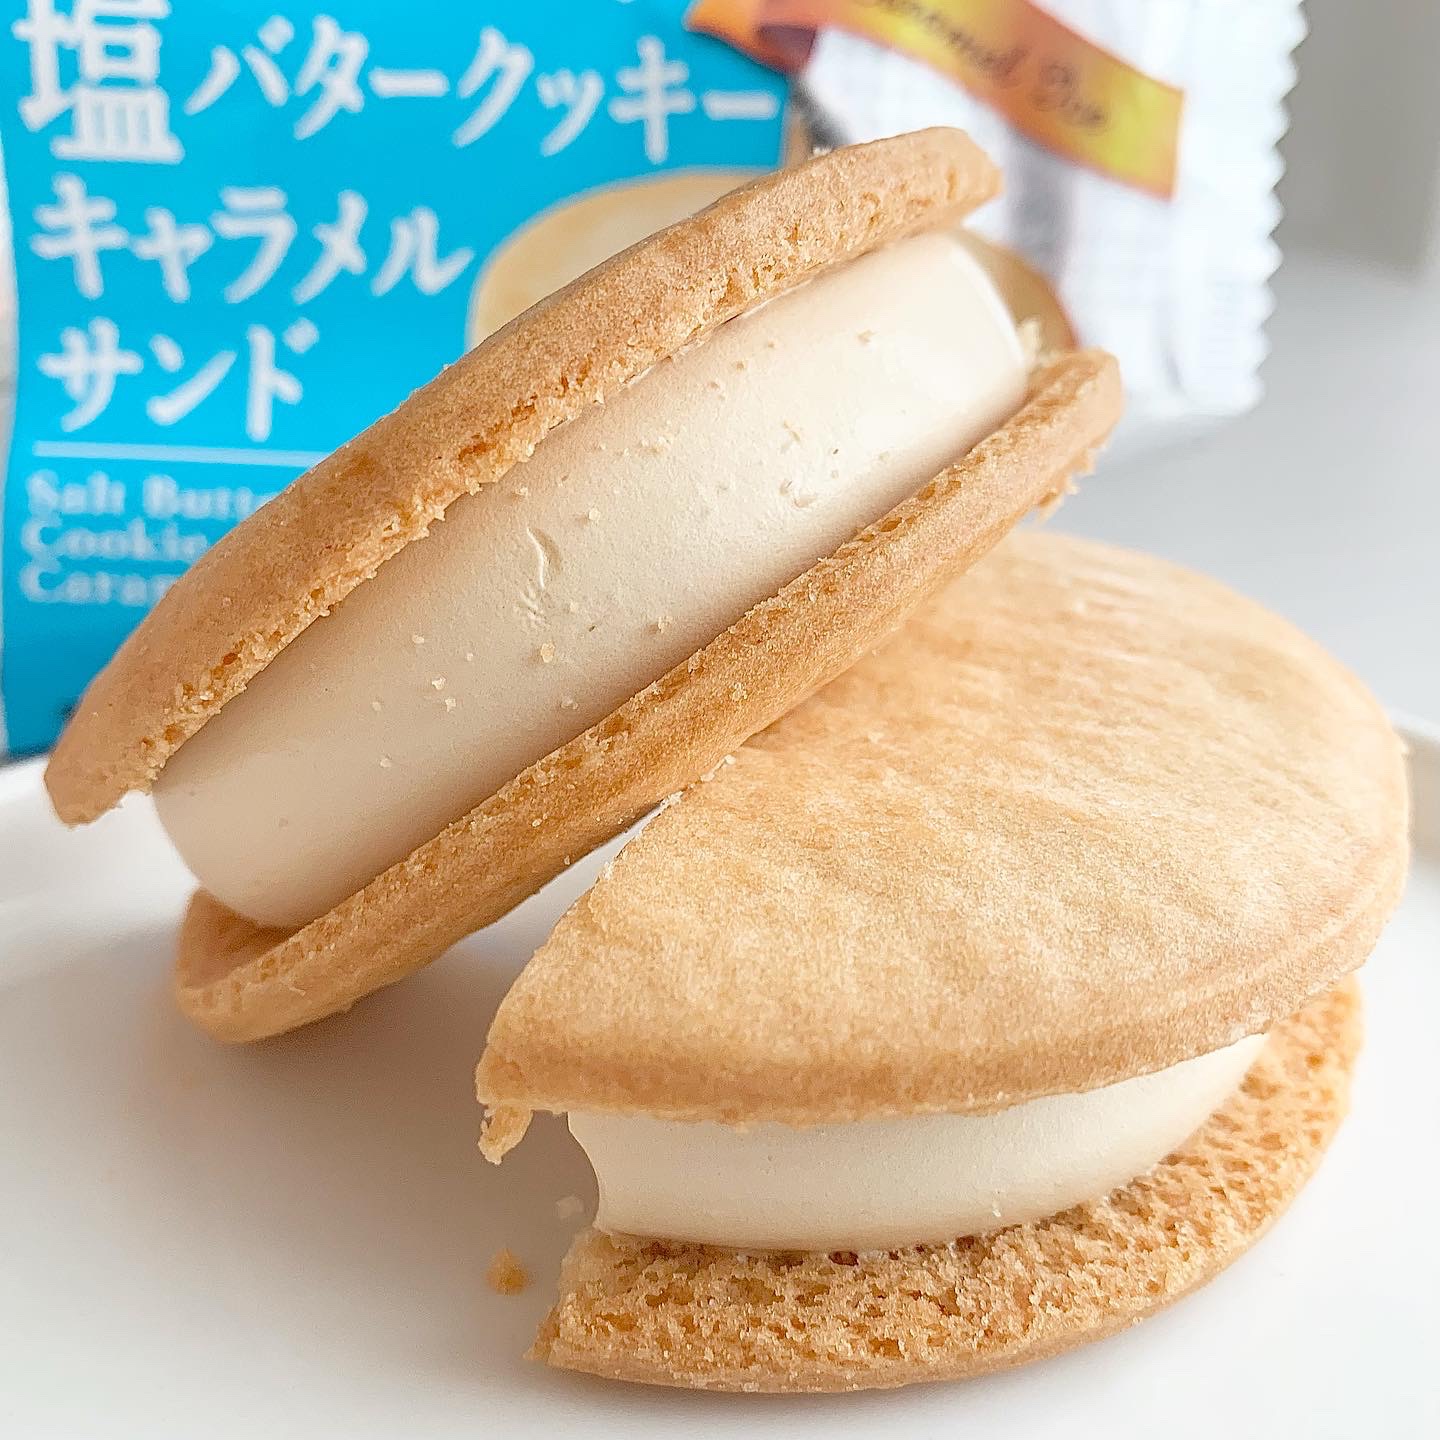 Lohaco 森永製菓 チョコチップクッキー 3箱 クッキー ビスケット お菓子